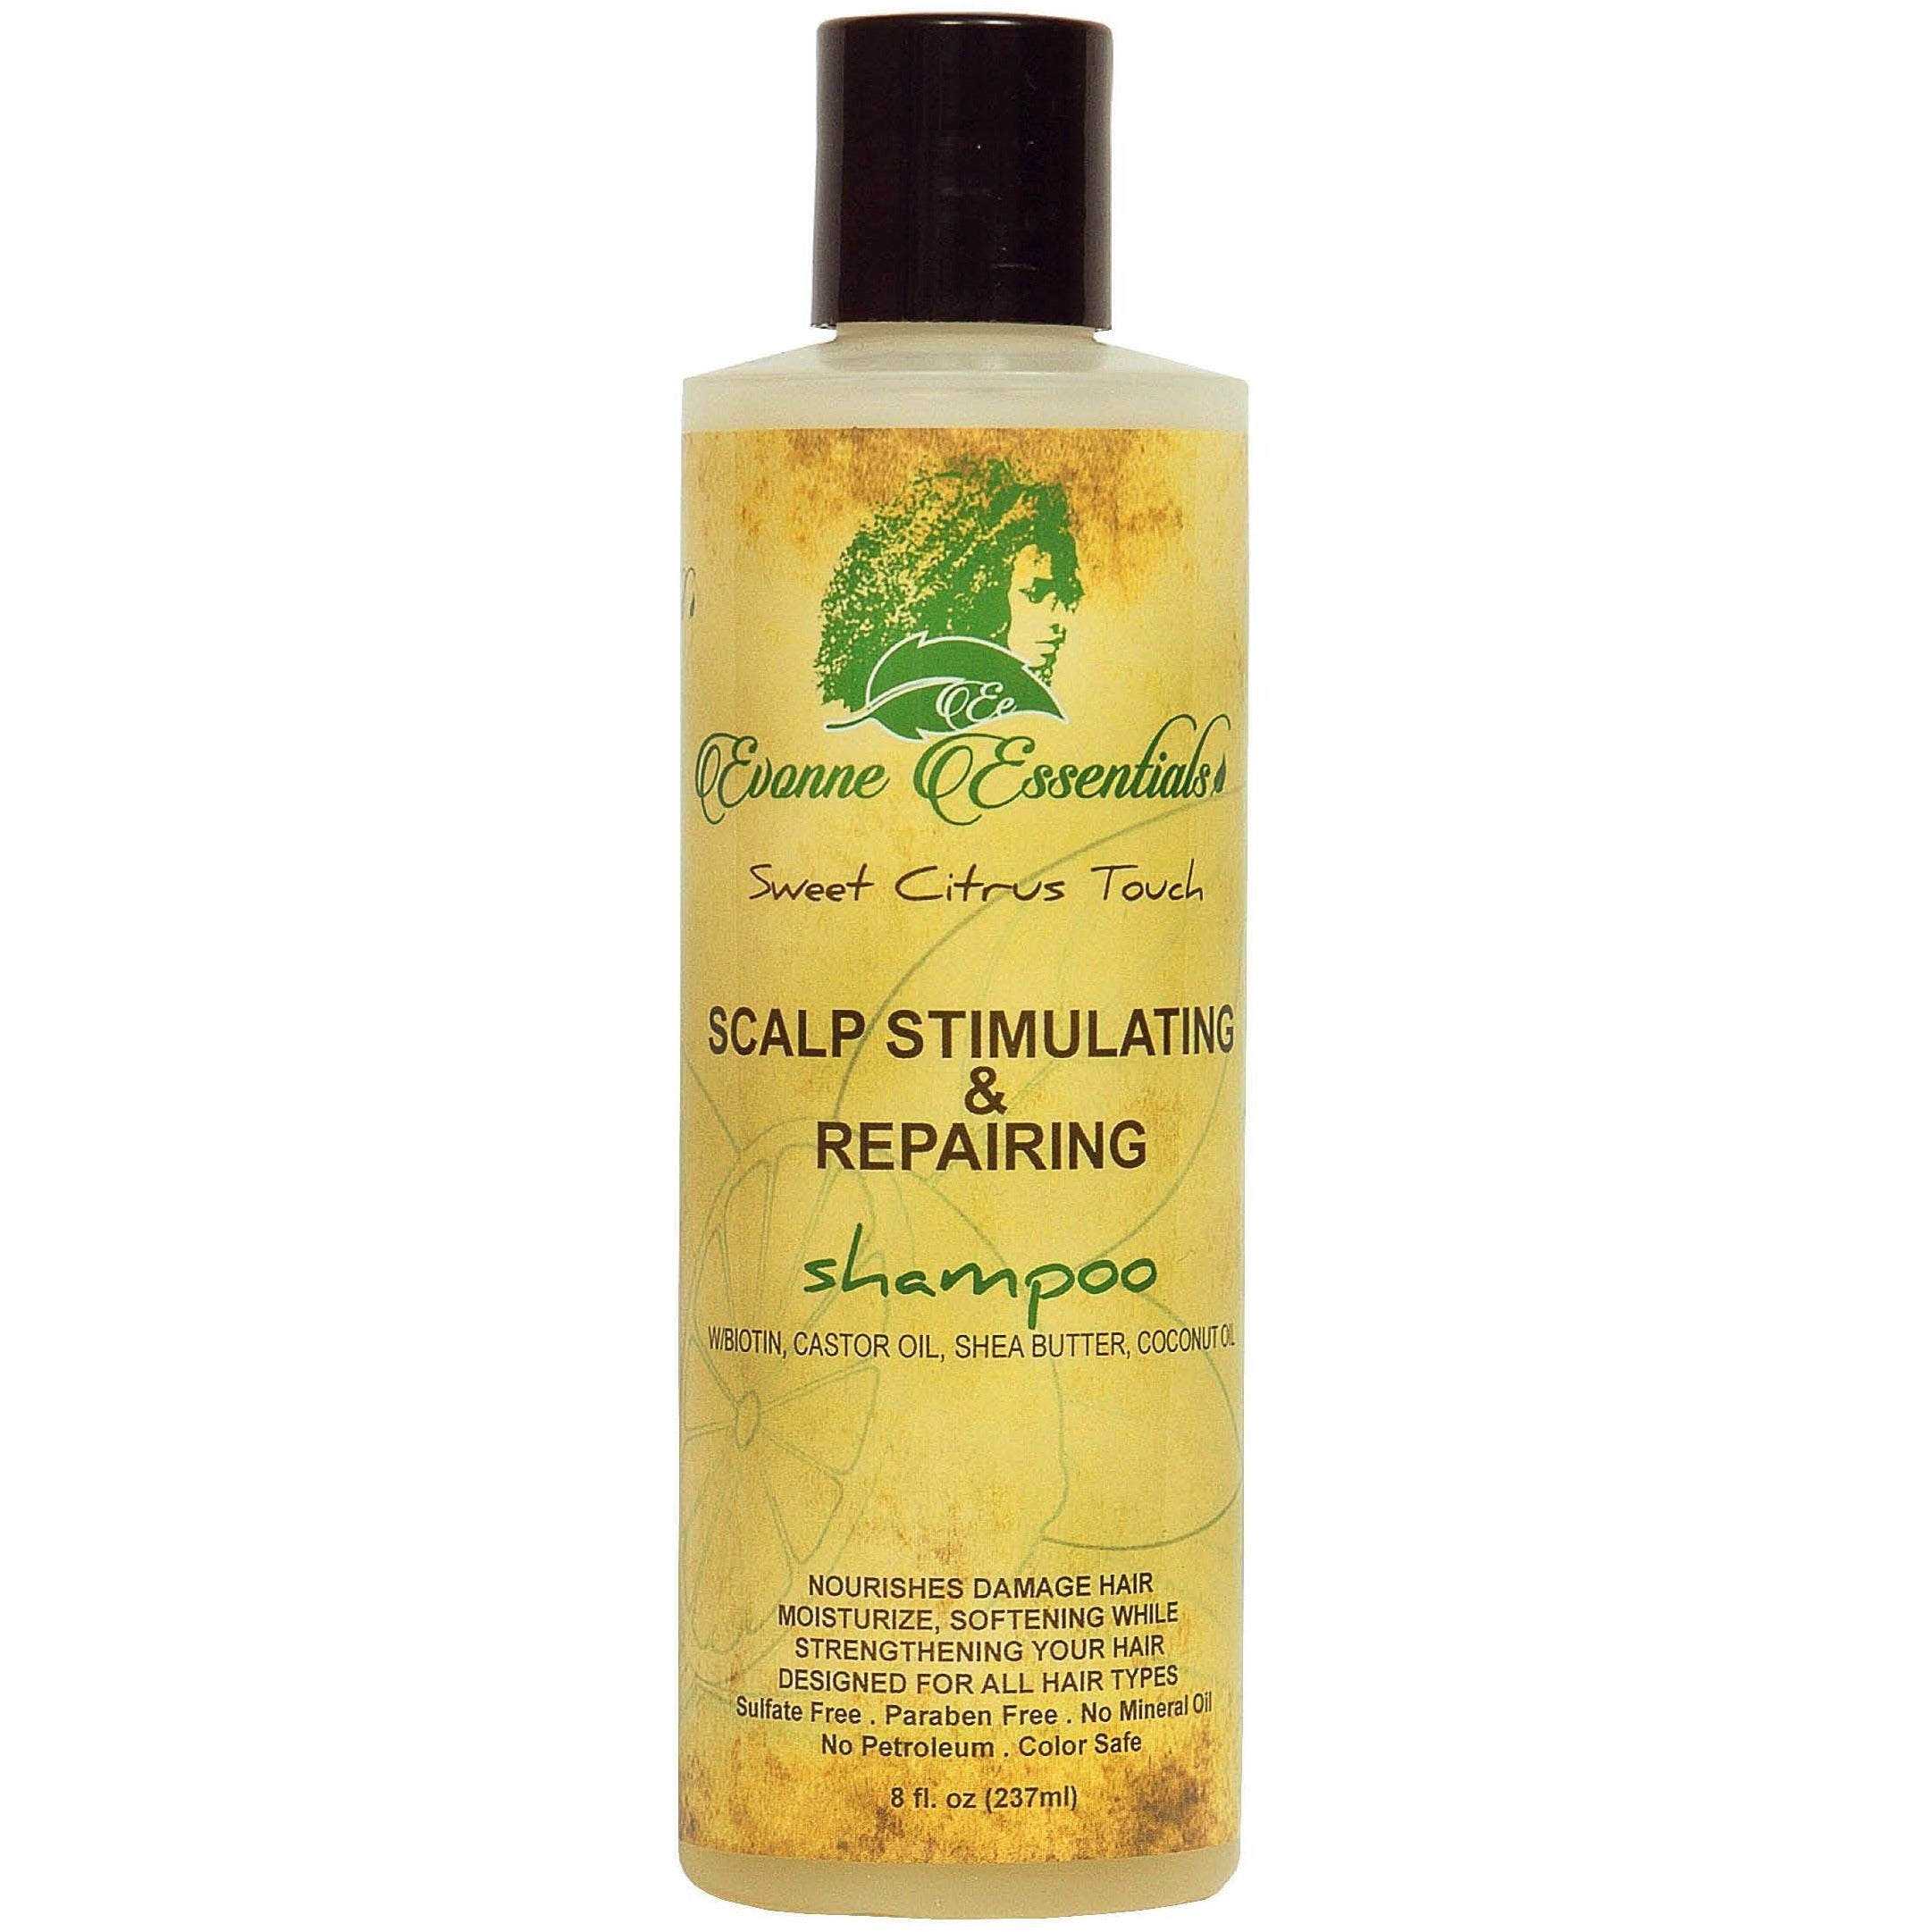 Sweet Citrus Touch Scalp Stimulating & Repairing Shampoo - 8 Oz